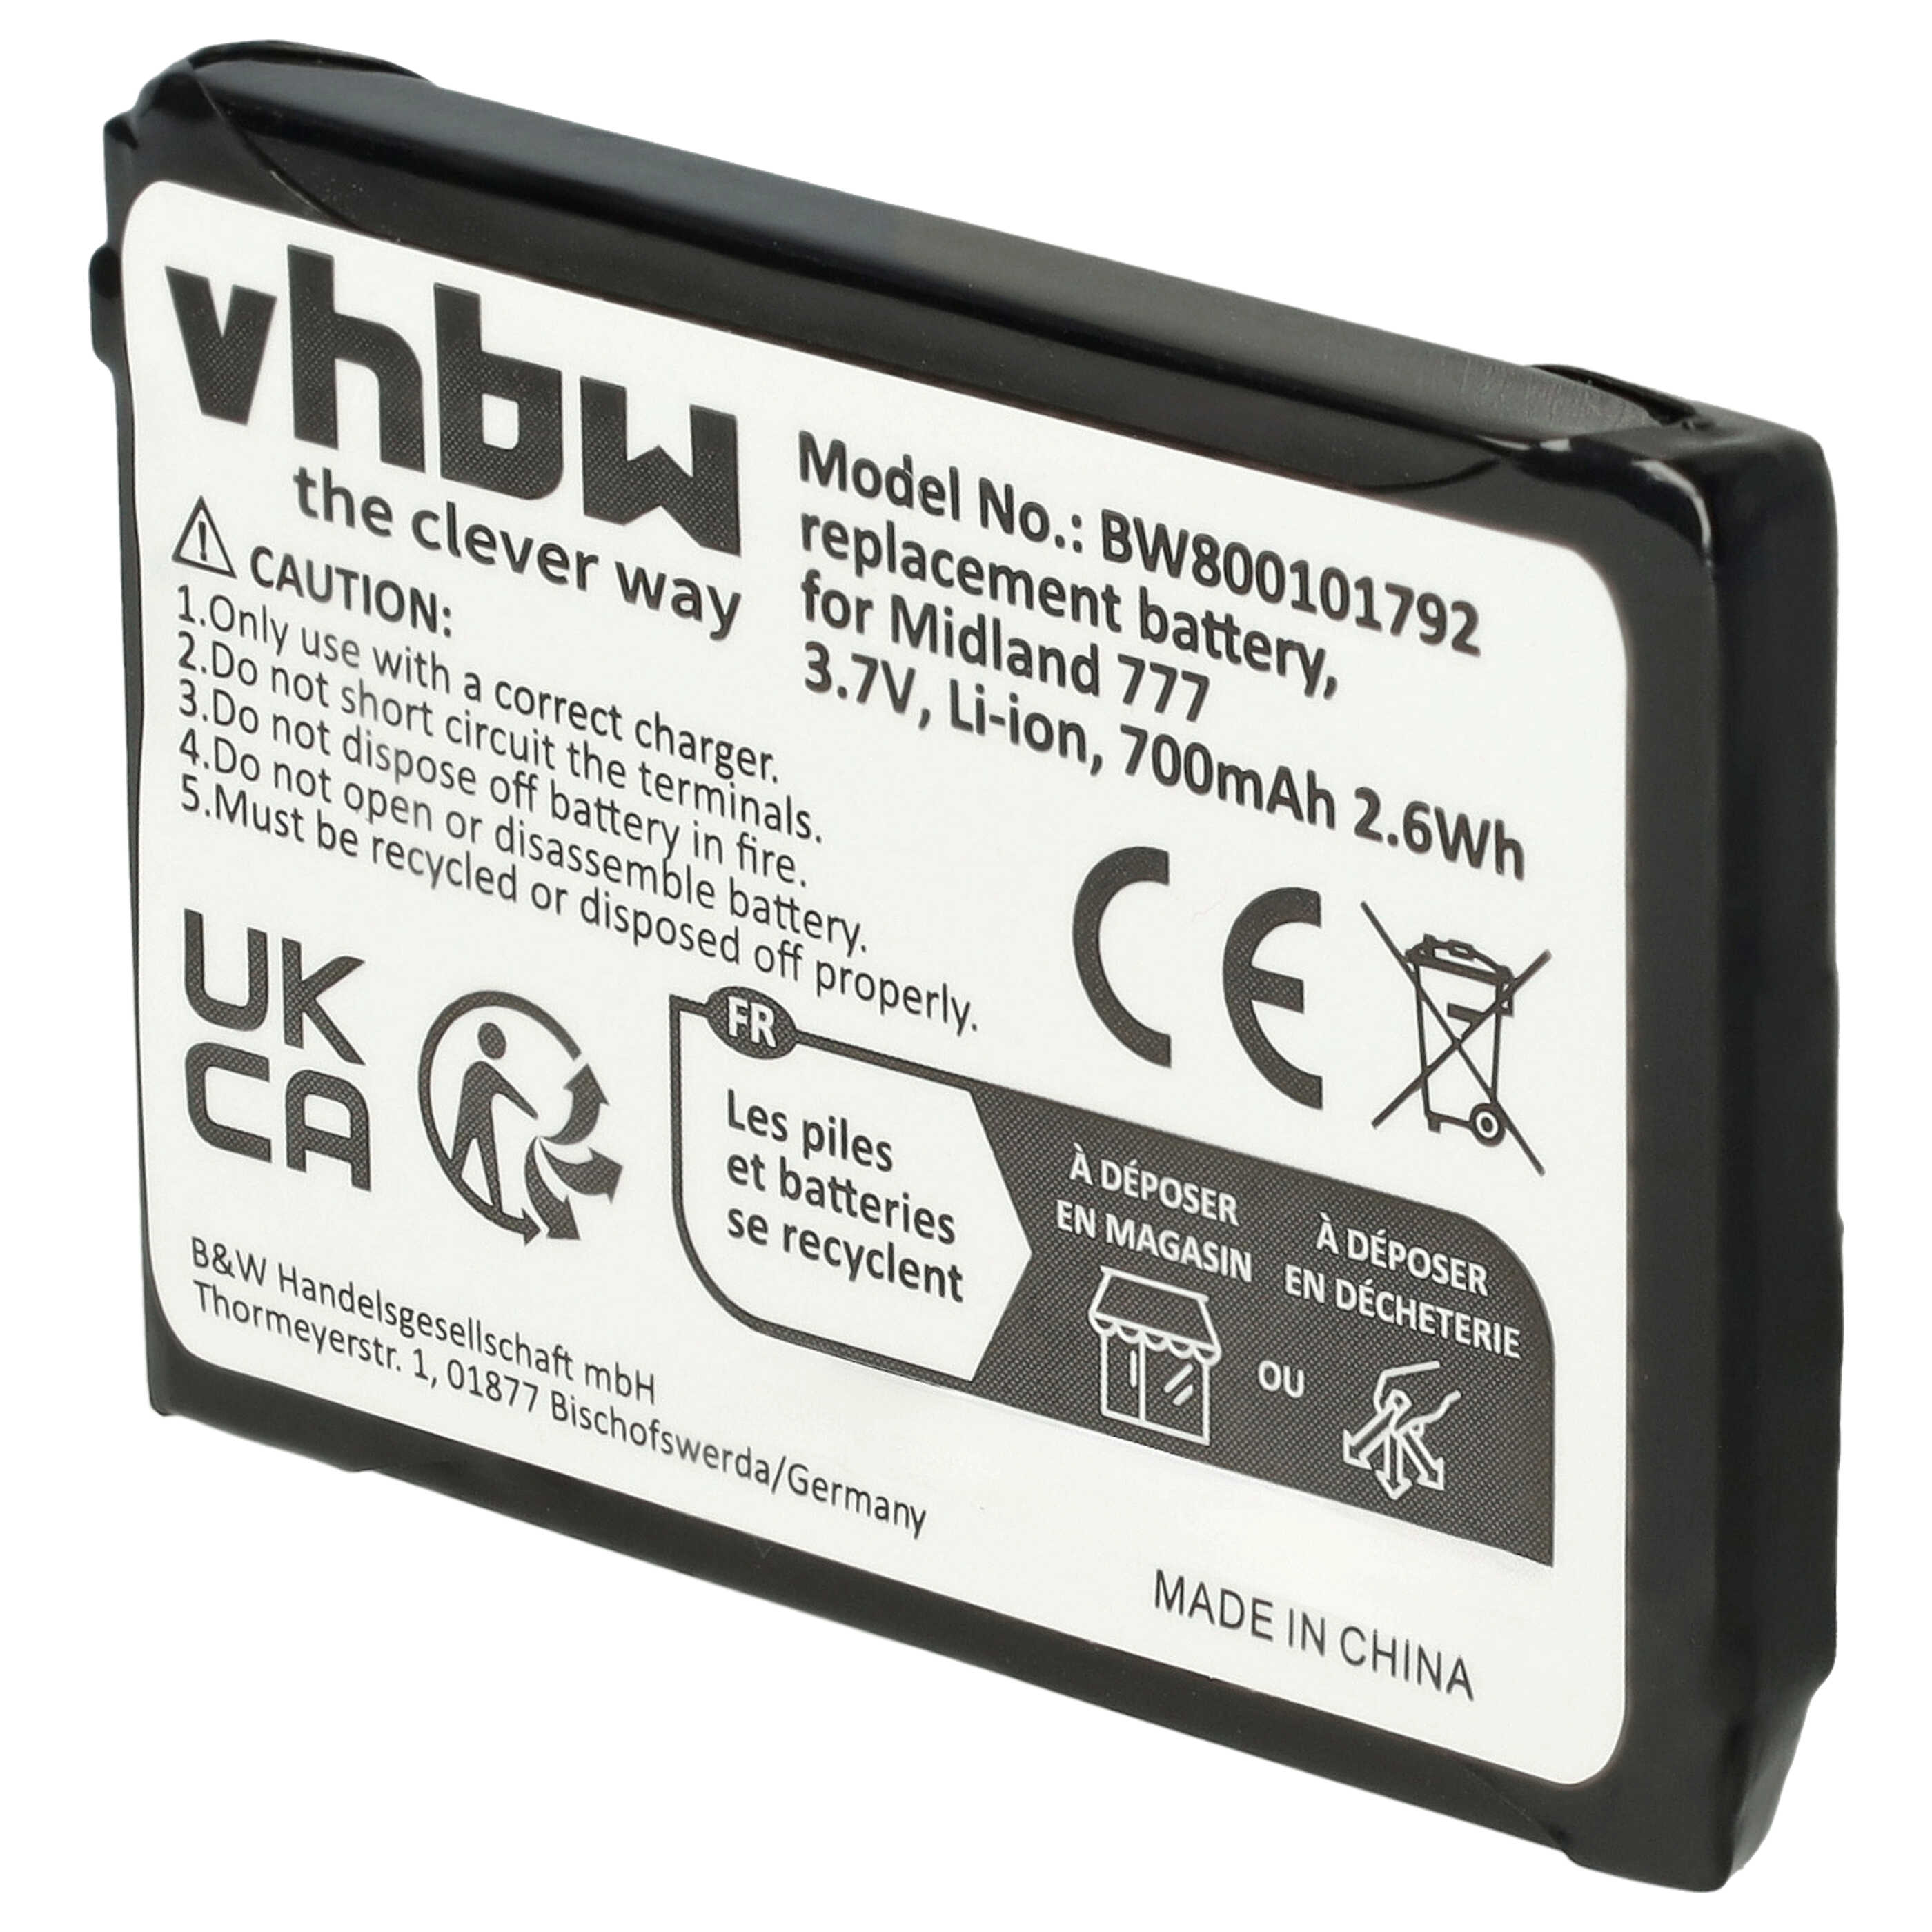 Radio Battery Replacement for Alan FB-777 - 700mAh 3.7V Li-Ion